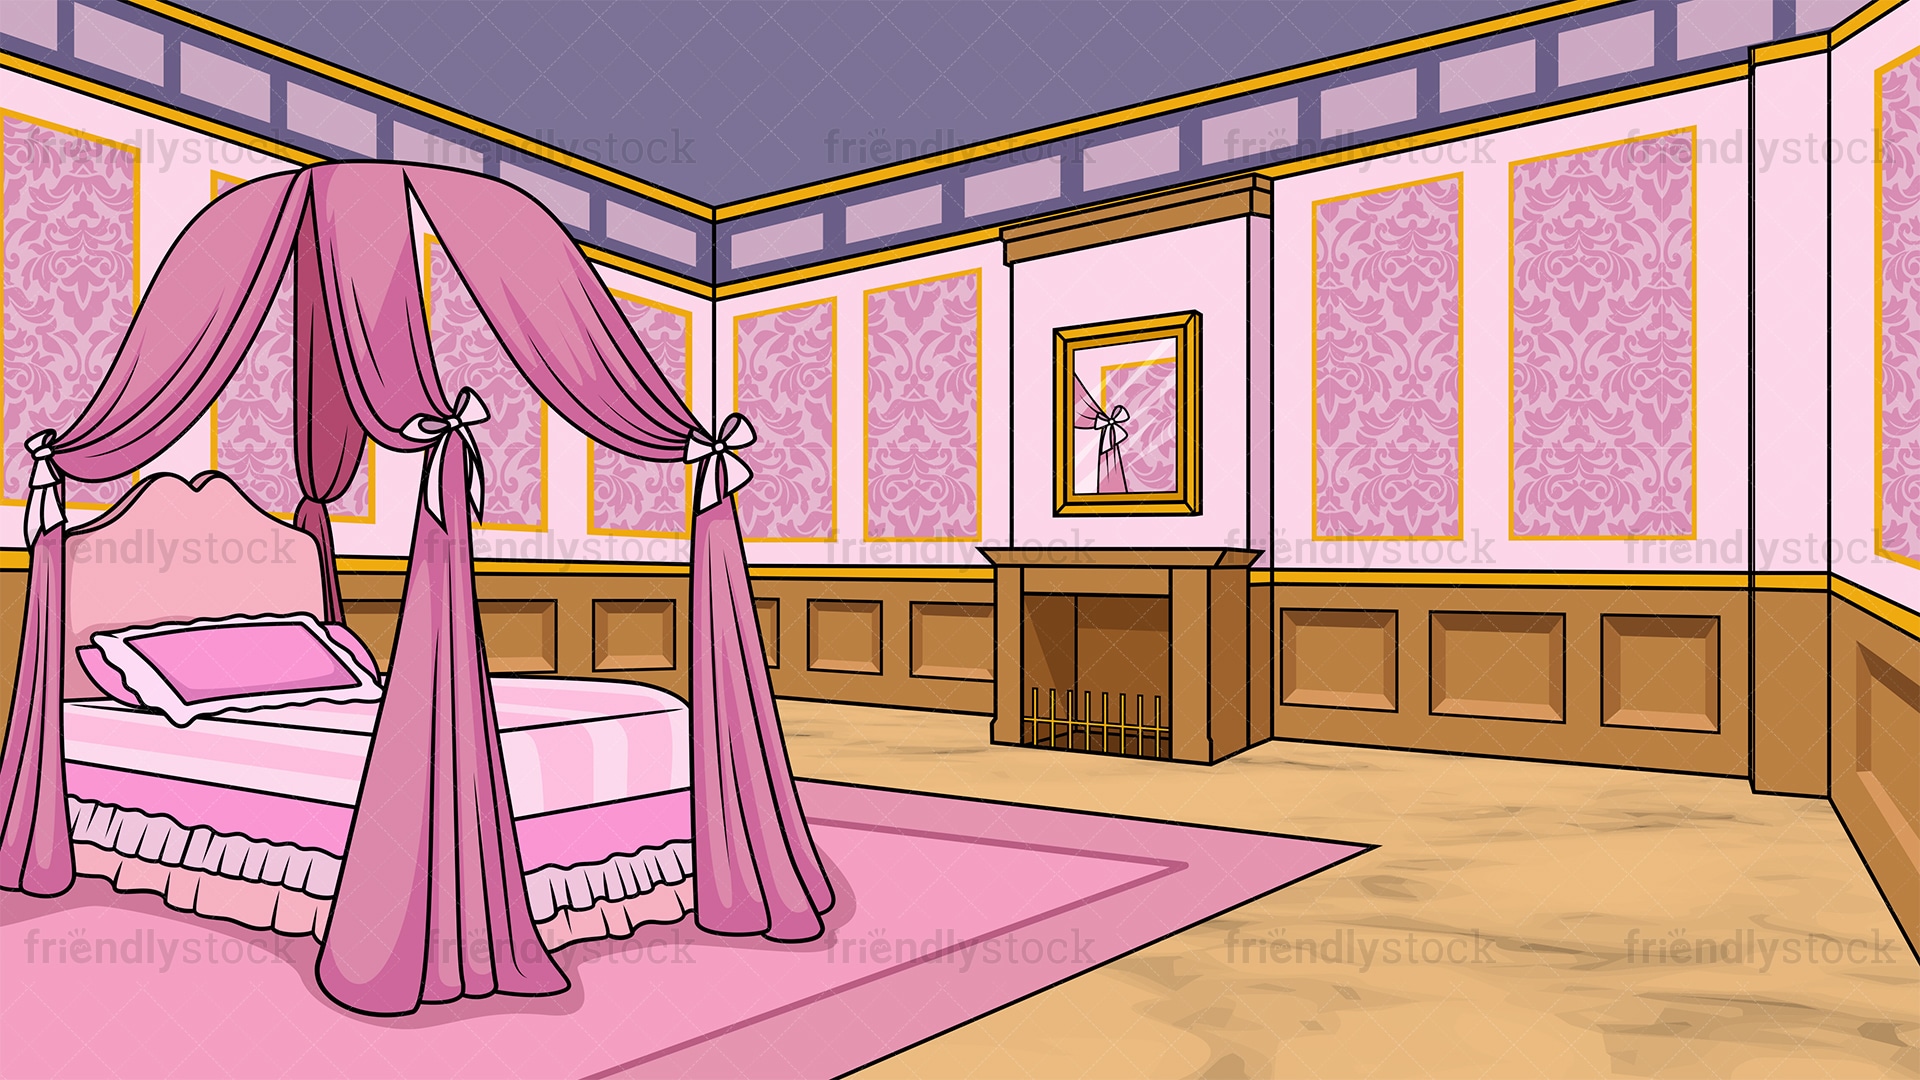 Princess Room Background Cartoon Vector Clipart - FriendlyStock